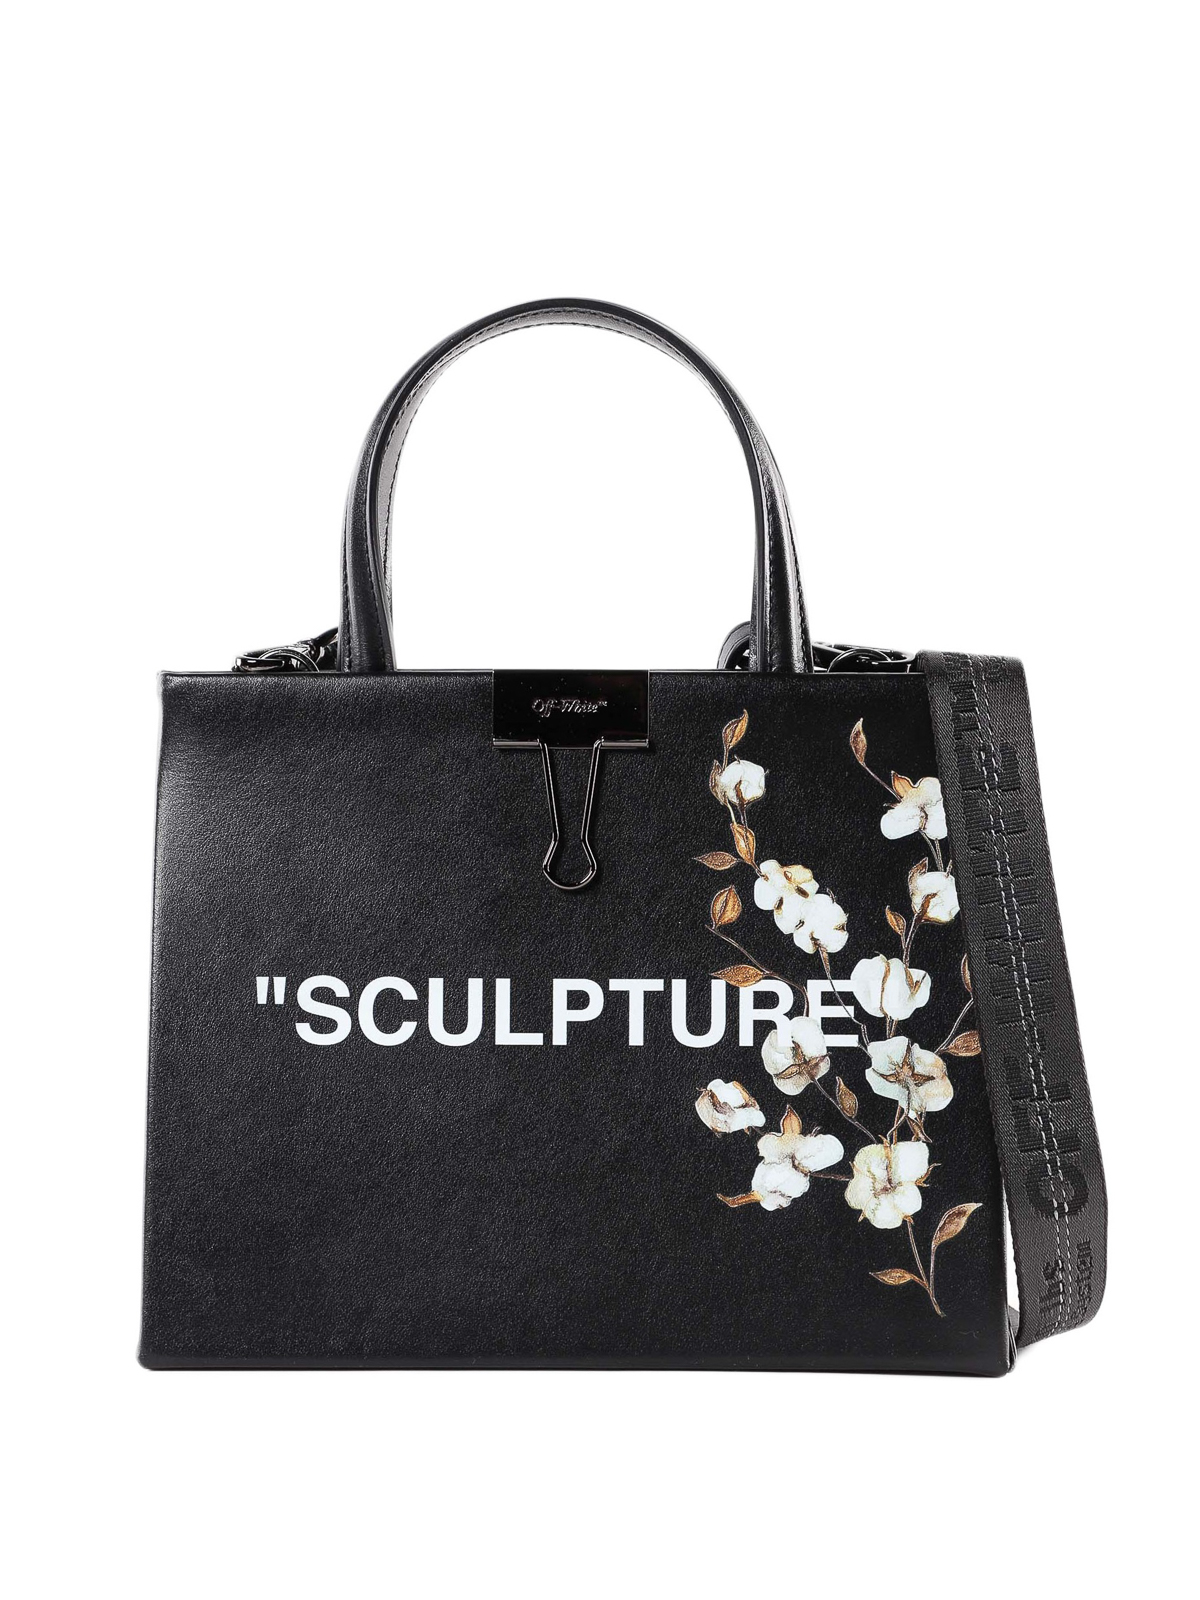 Off-White 'Sculpture' printed shoulder bag, Women's Bags